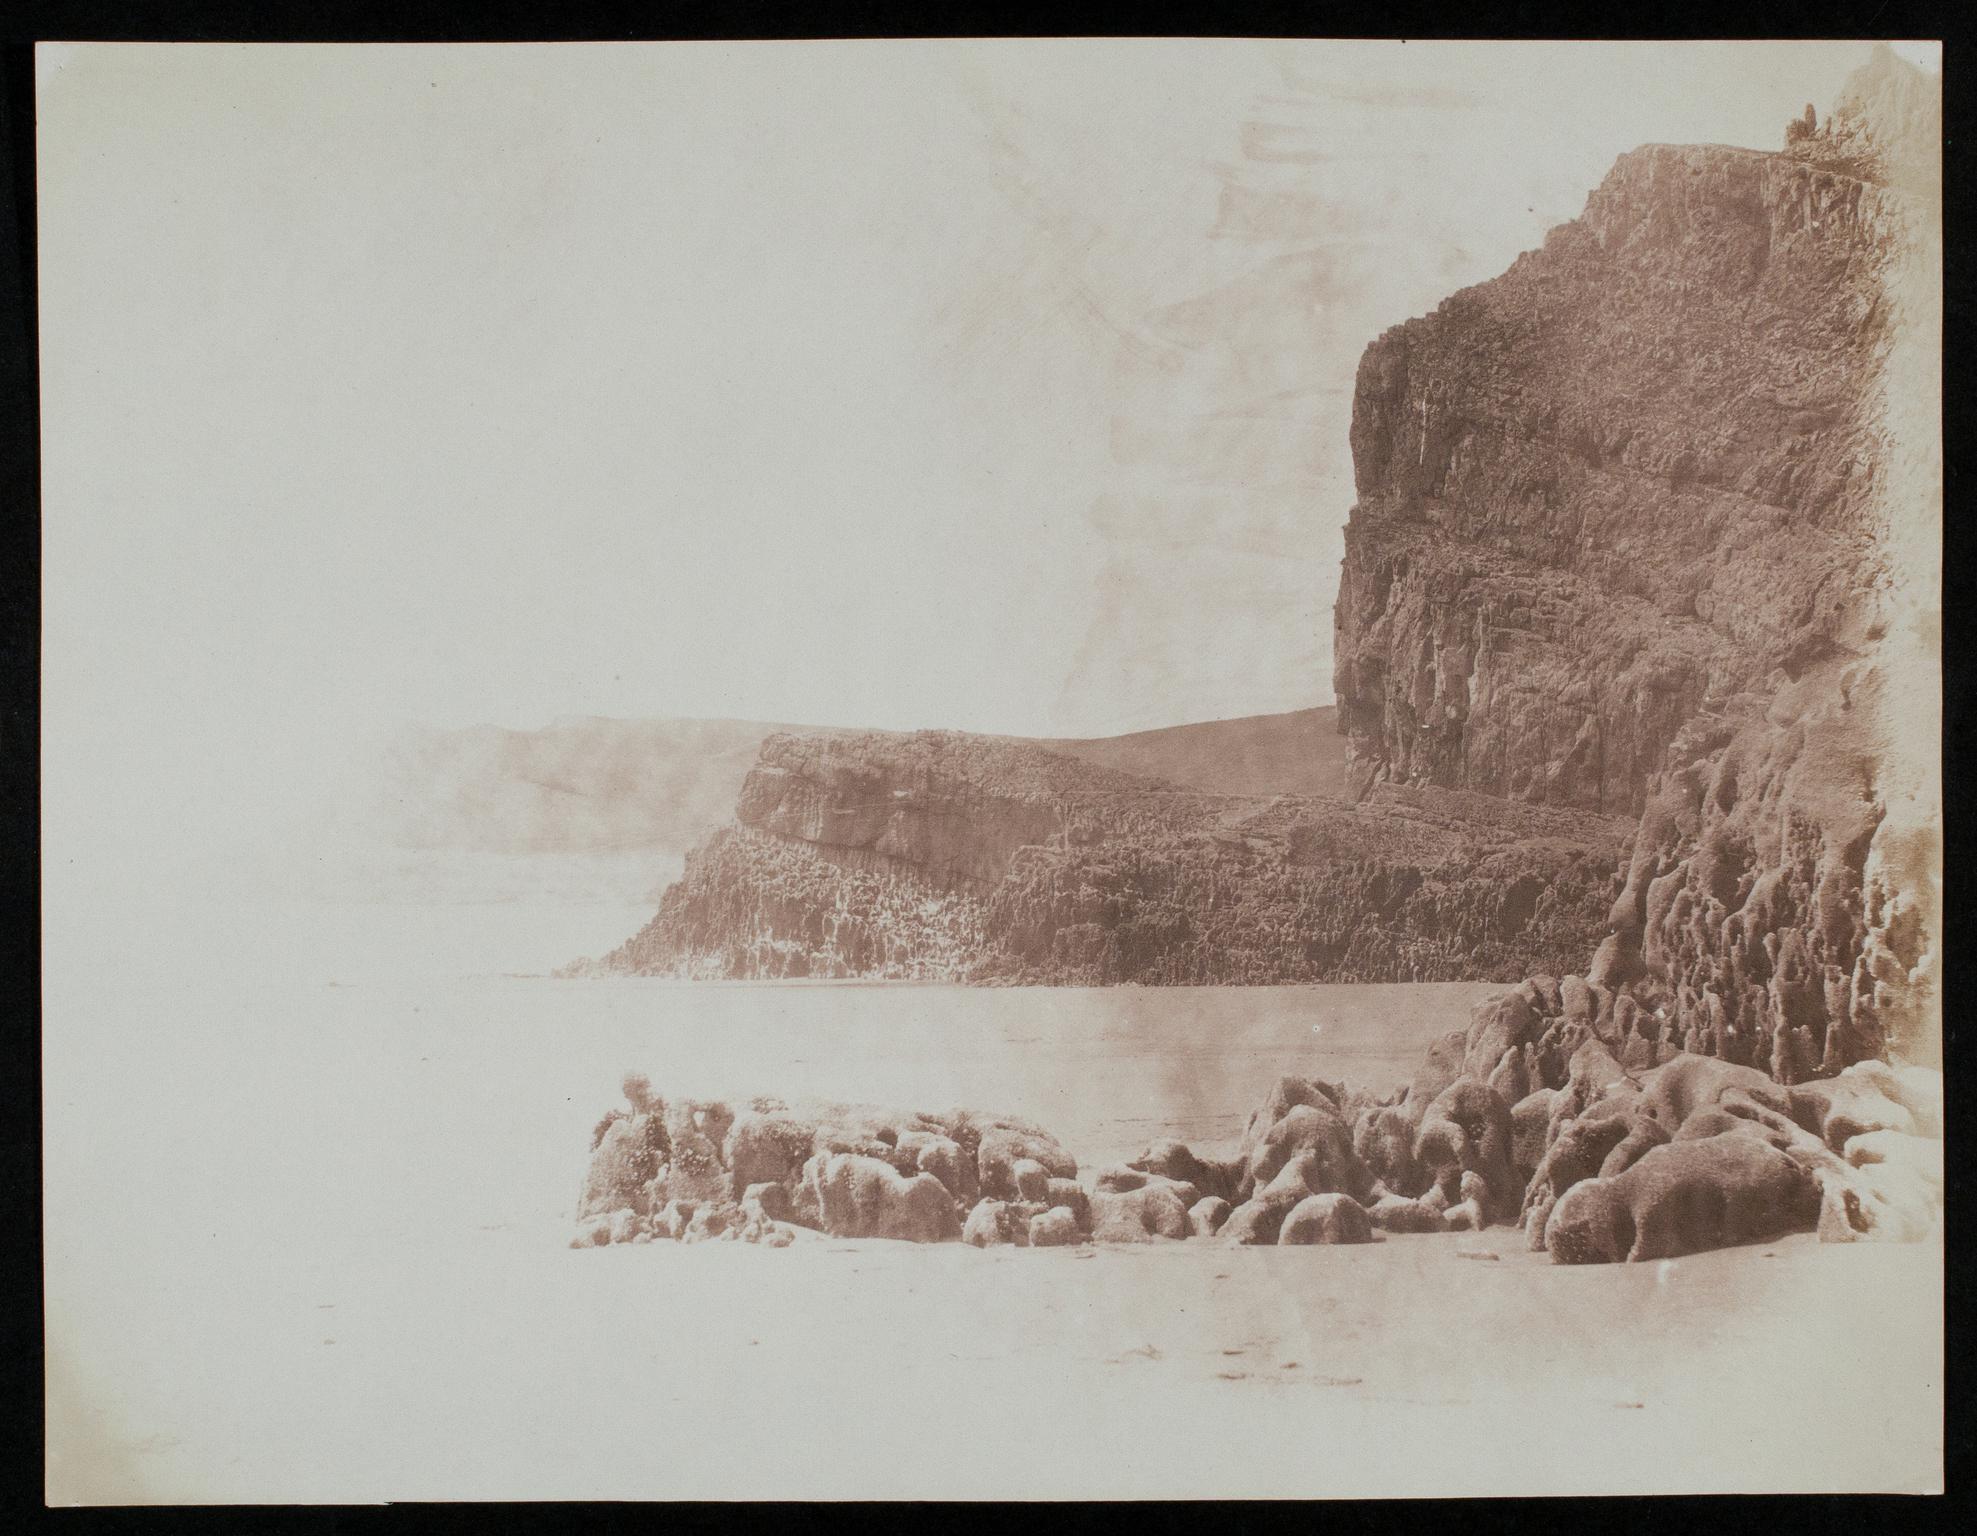 Beach with cliffs, photograph